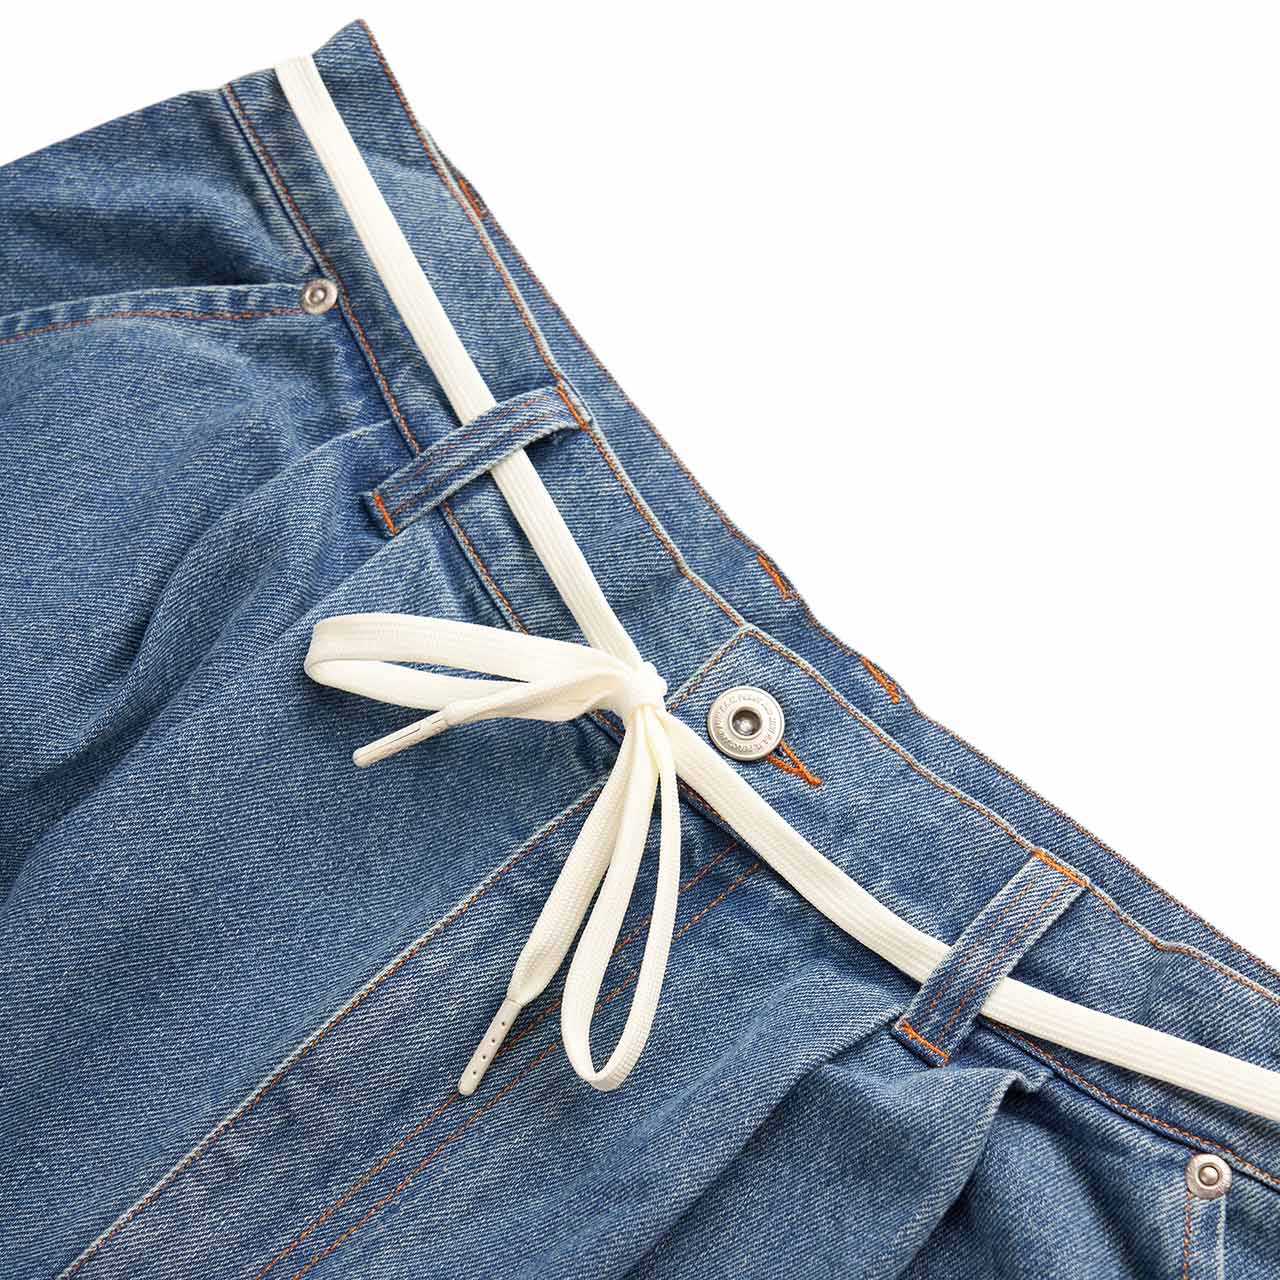 perks and mini perks and mini bri bri jeans